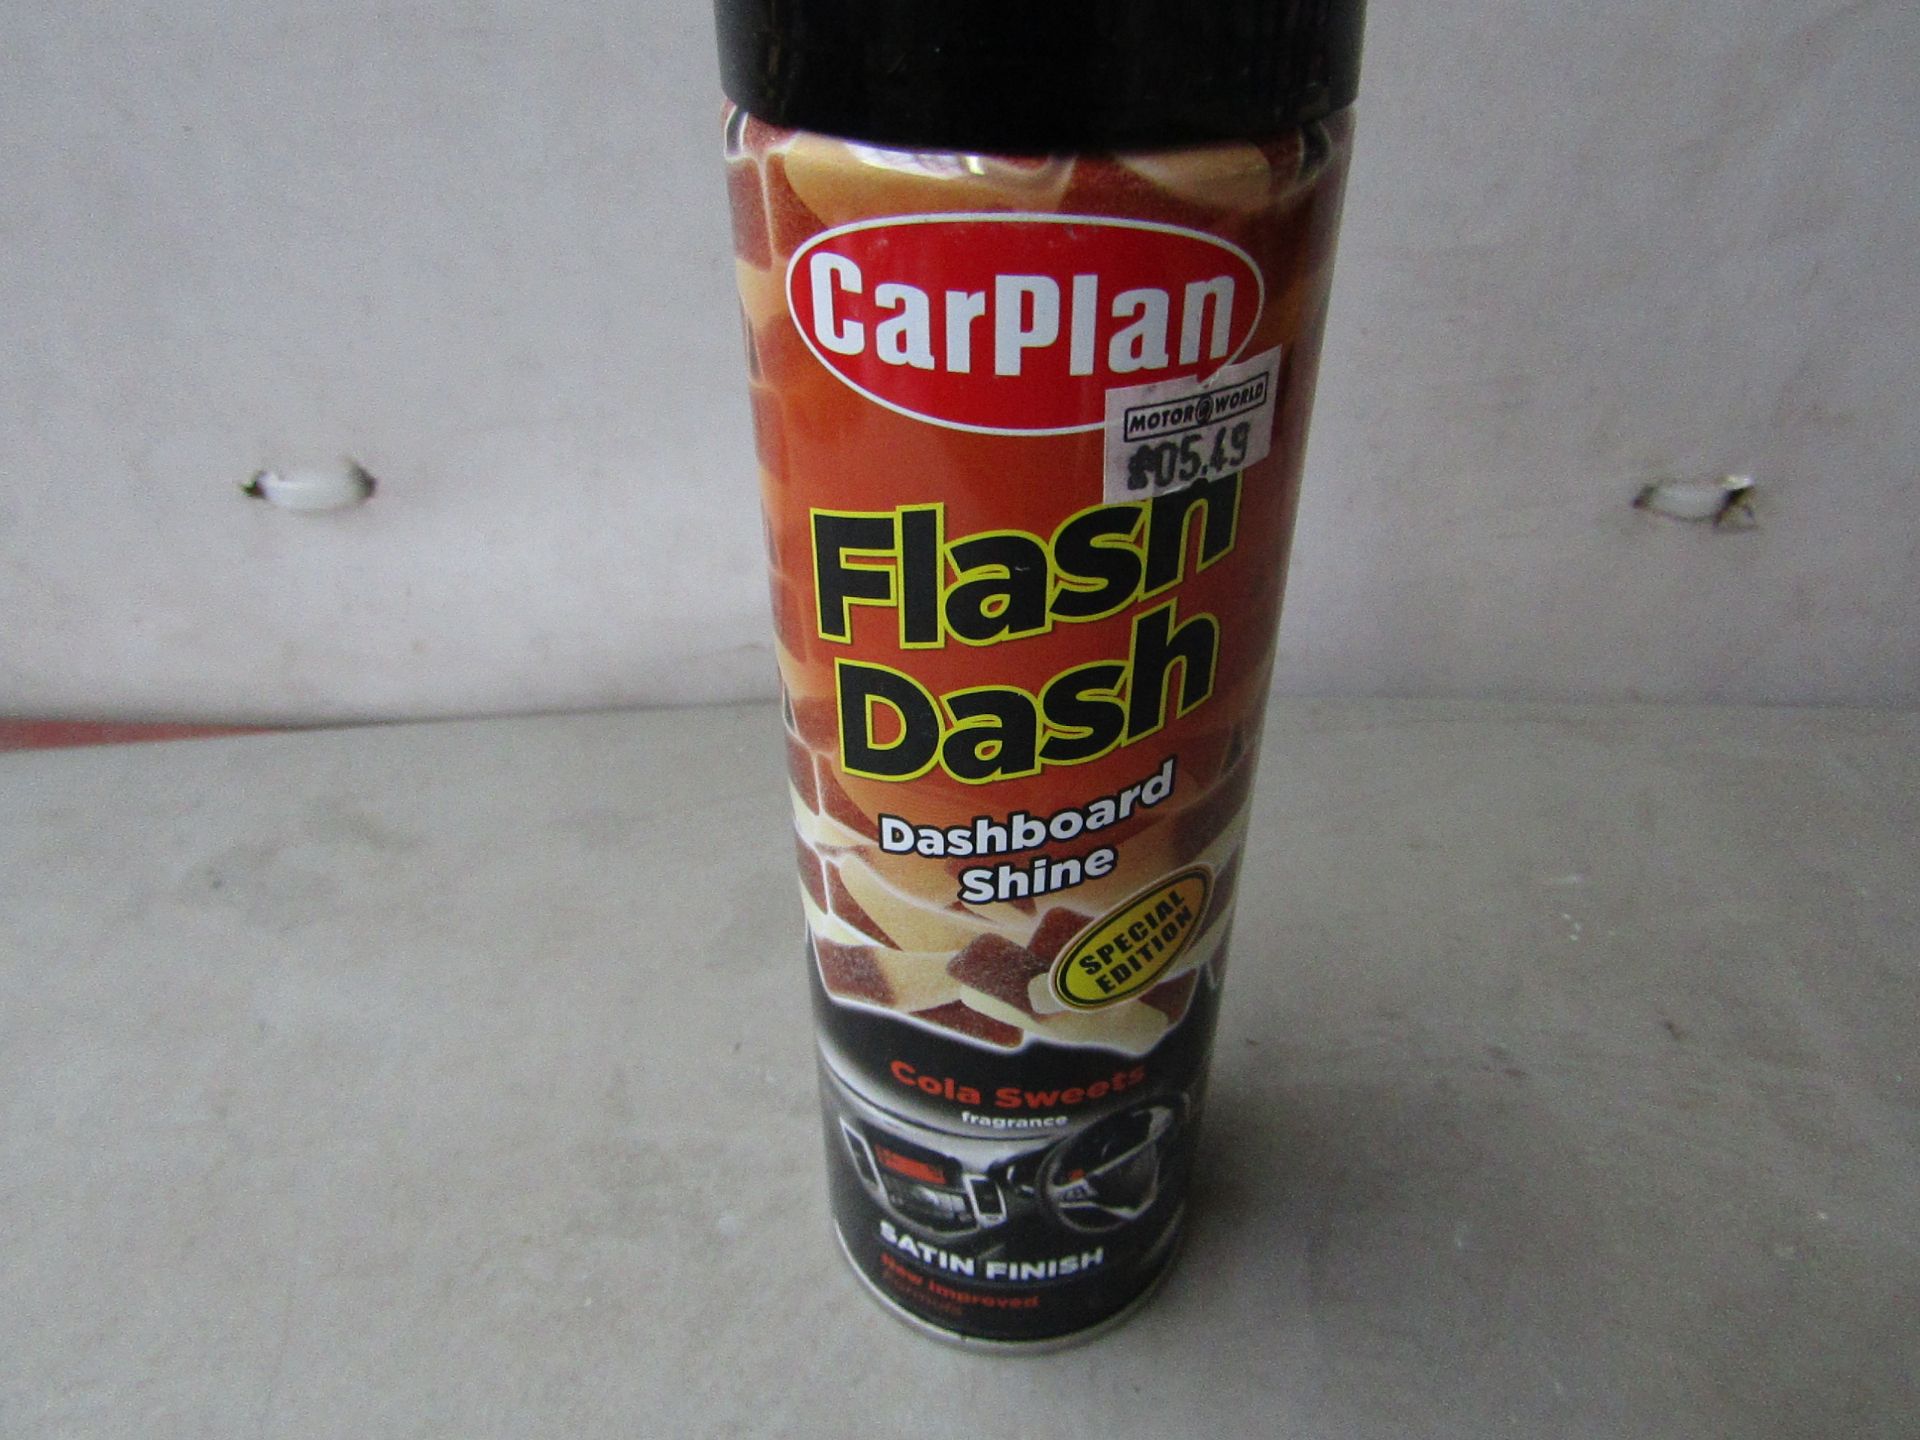 4x Carplan - Flash Dash - Dashboard Shine - Satin Finish (Cola Fragrence) 500ml - Unused.